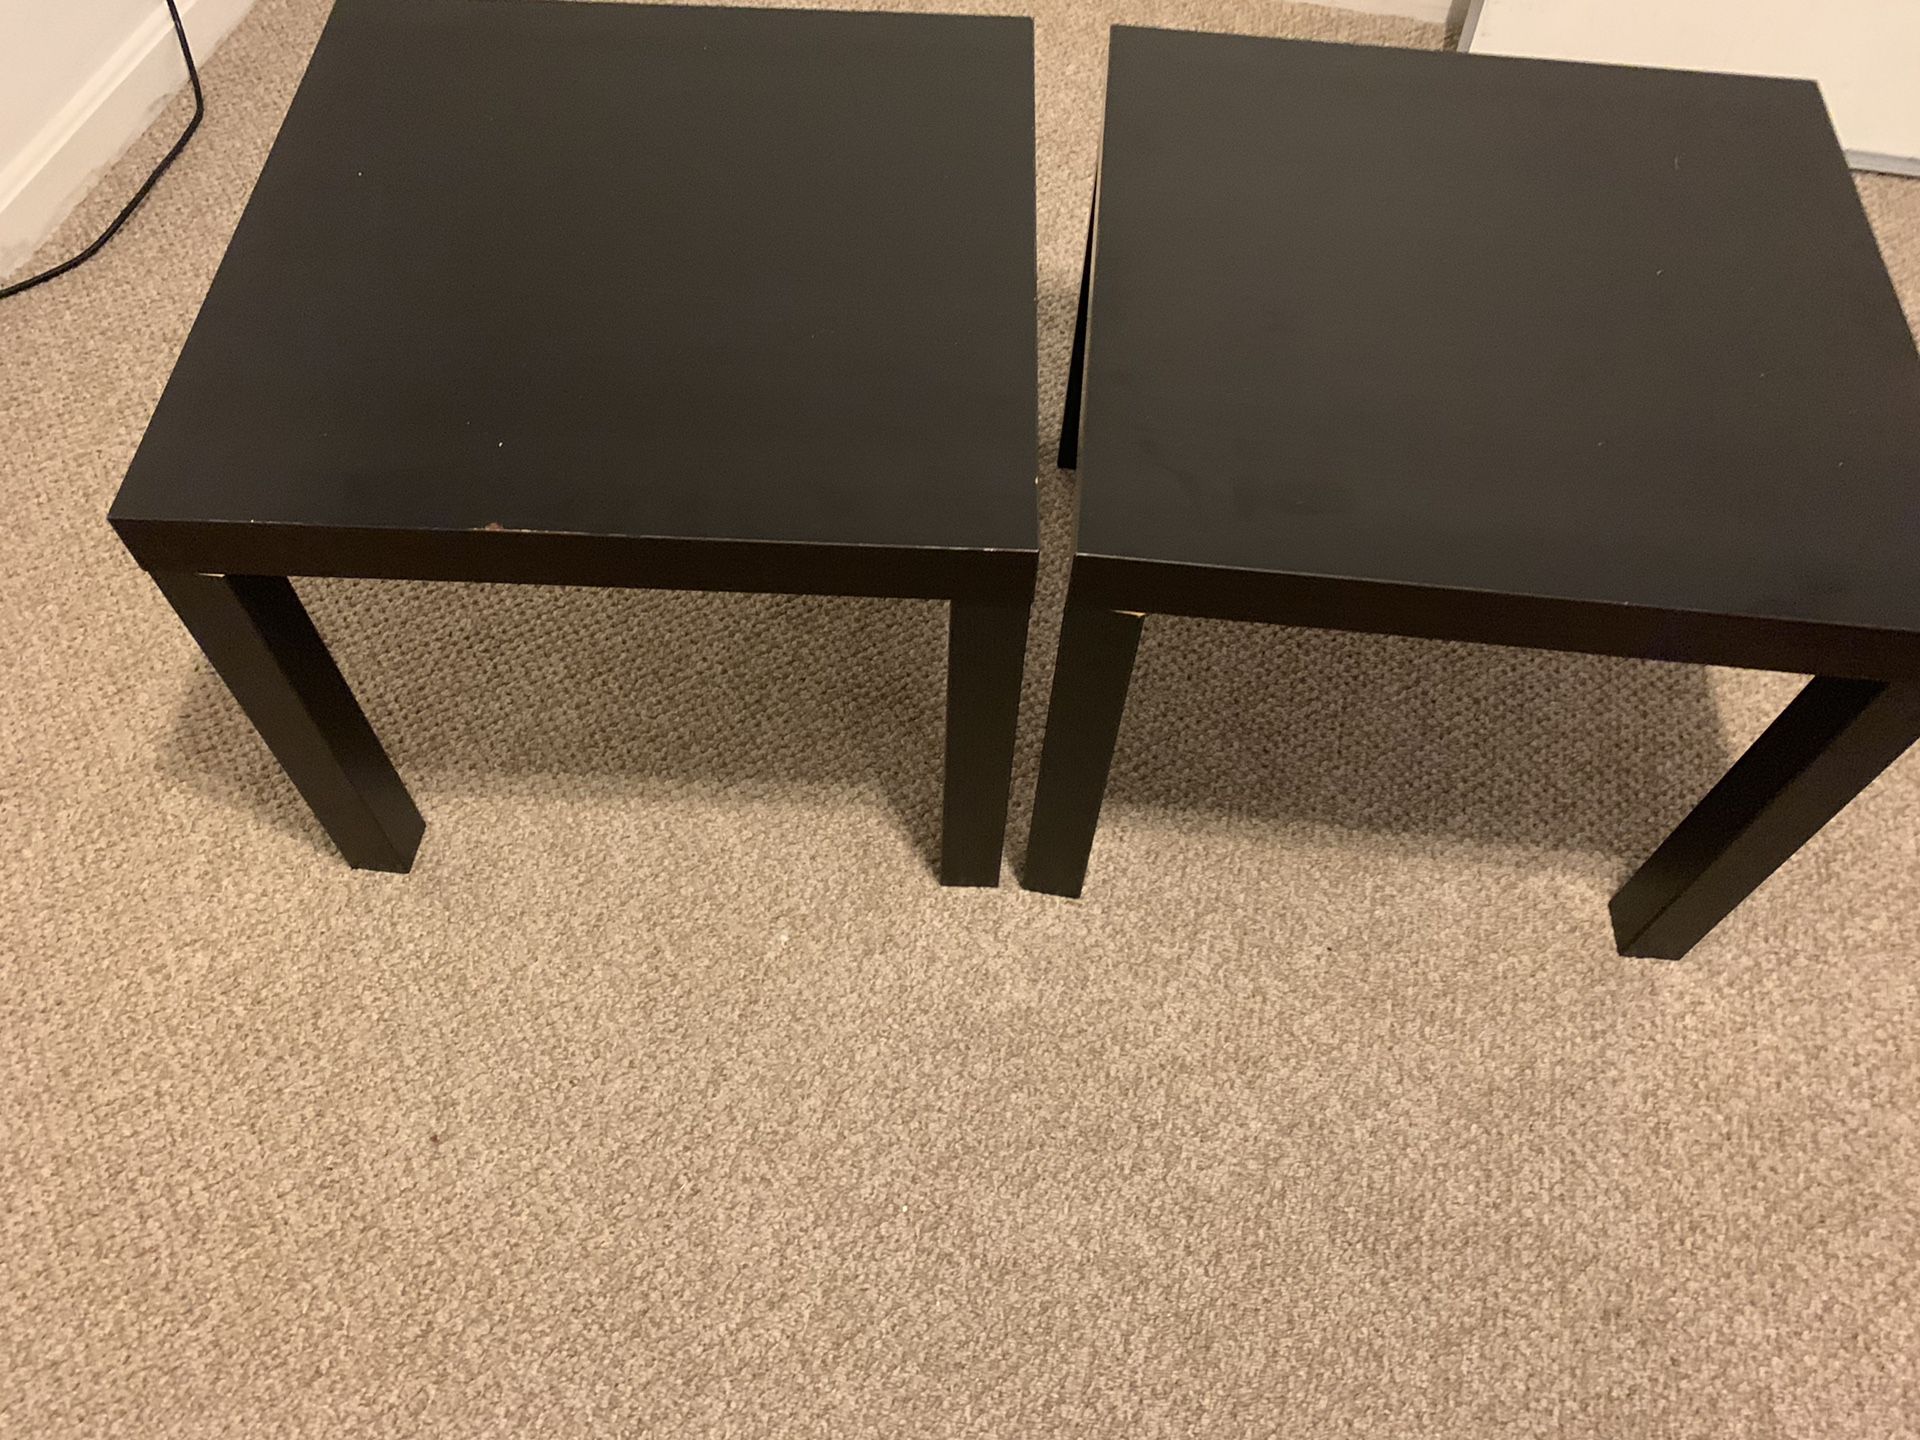 IKEA LACK side tables